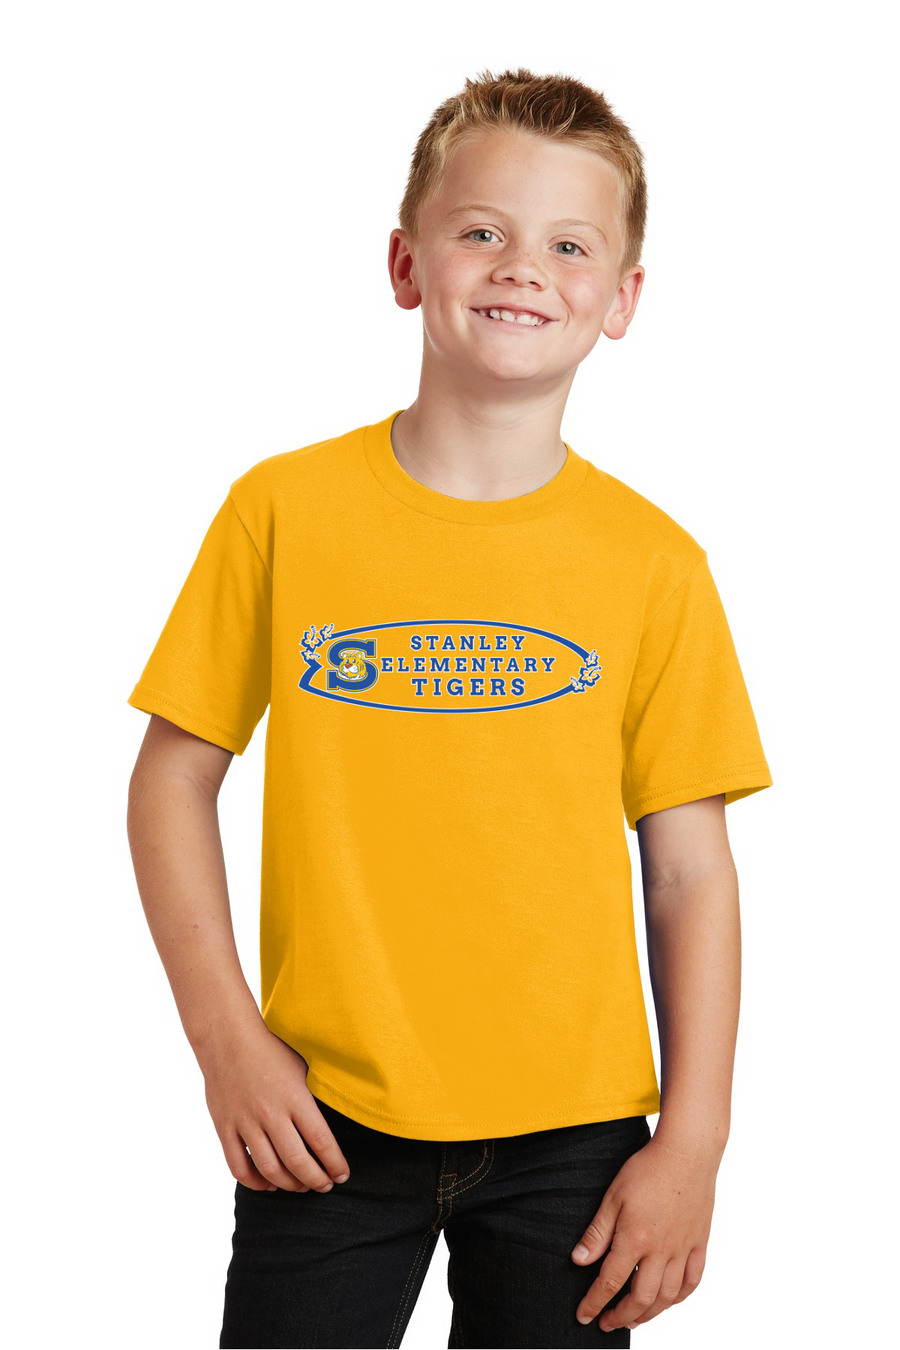 The Tiger Store - Stanley Elementary 2023/24 On-Demand-Premium Soft Unisex T-Shirt Surf Board Logo